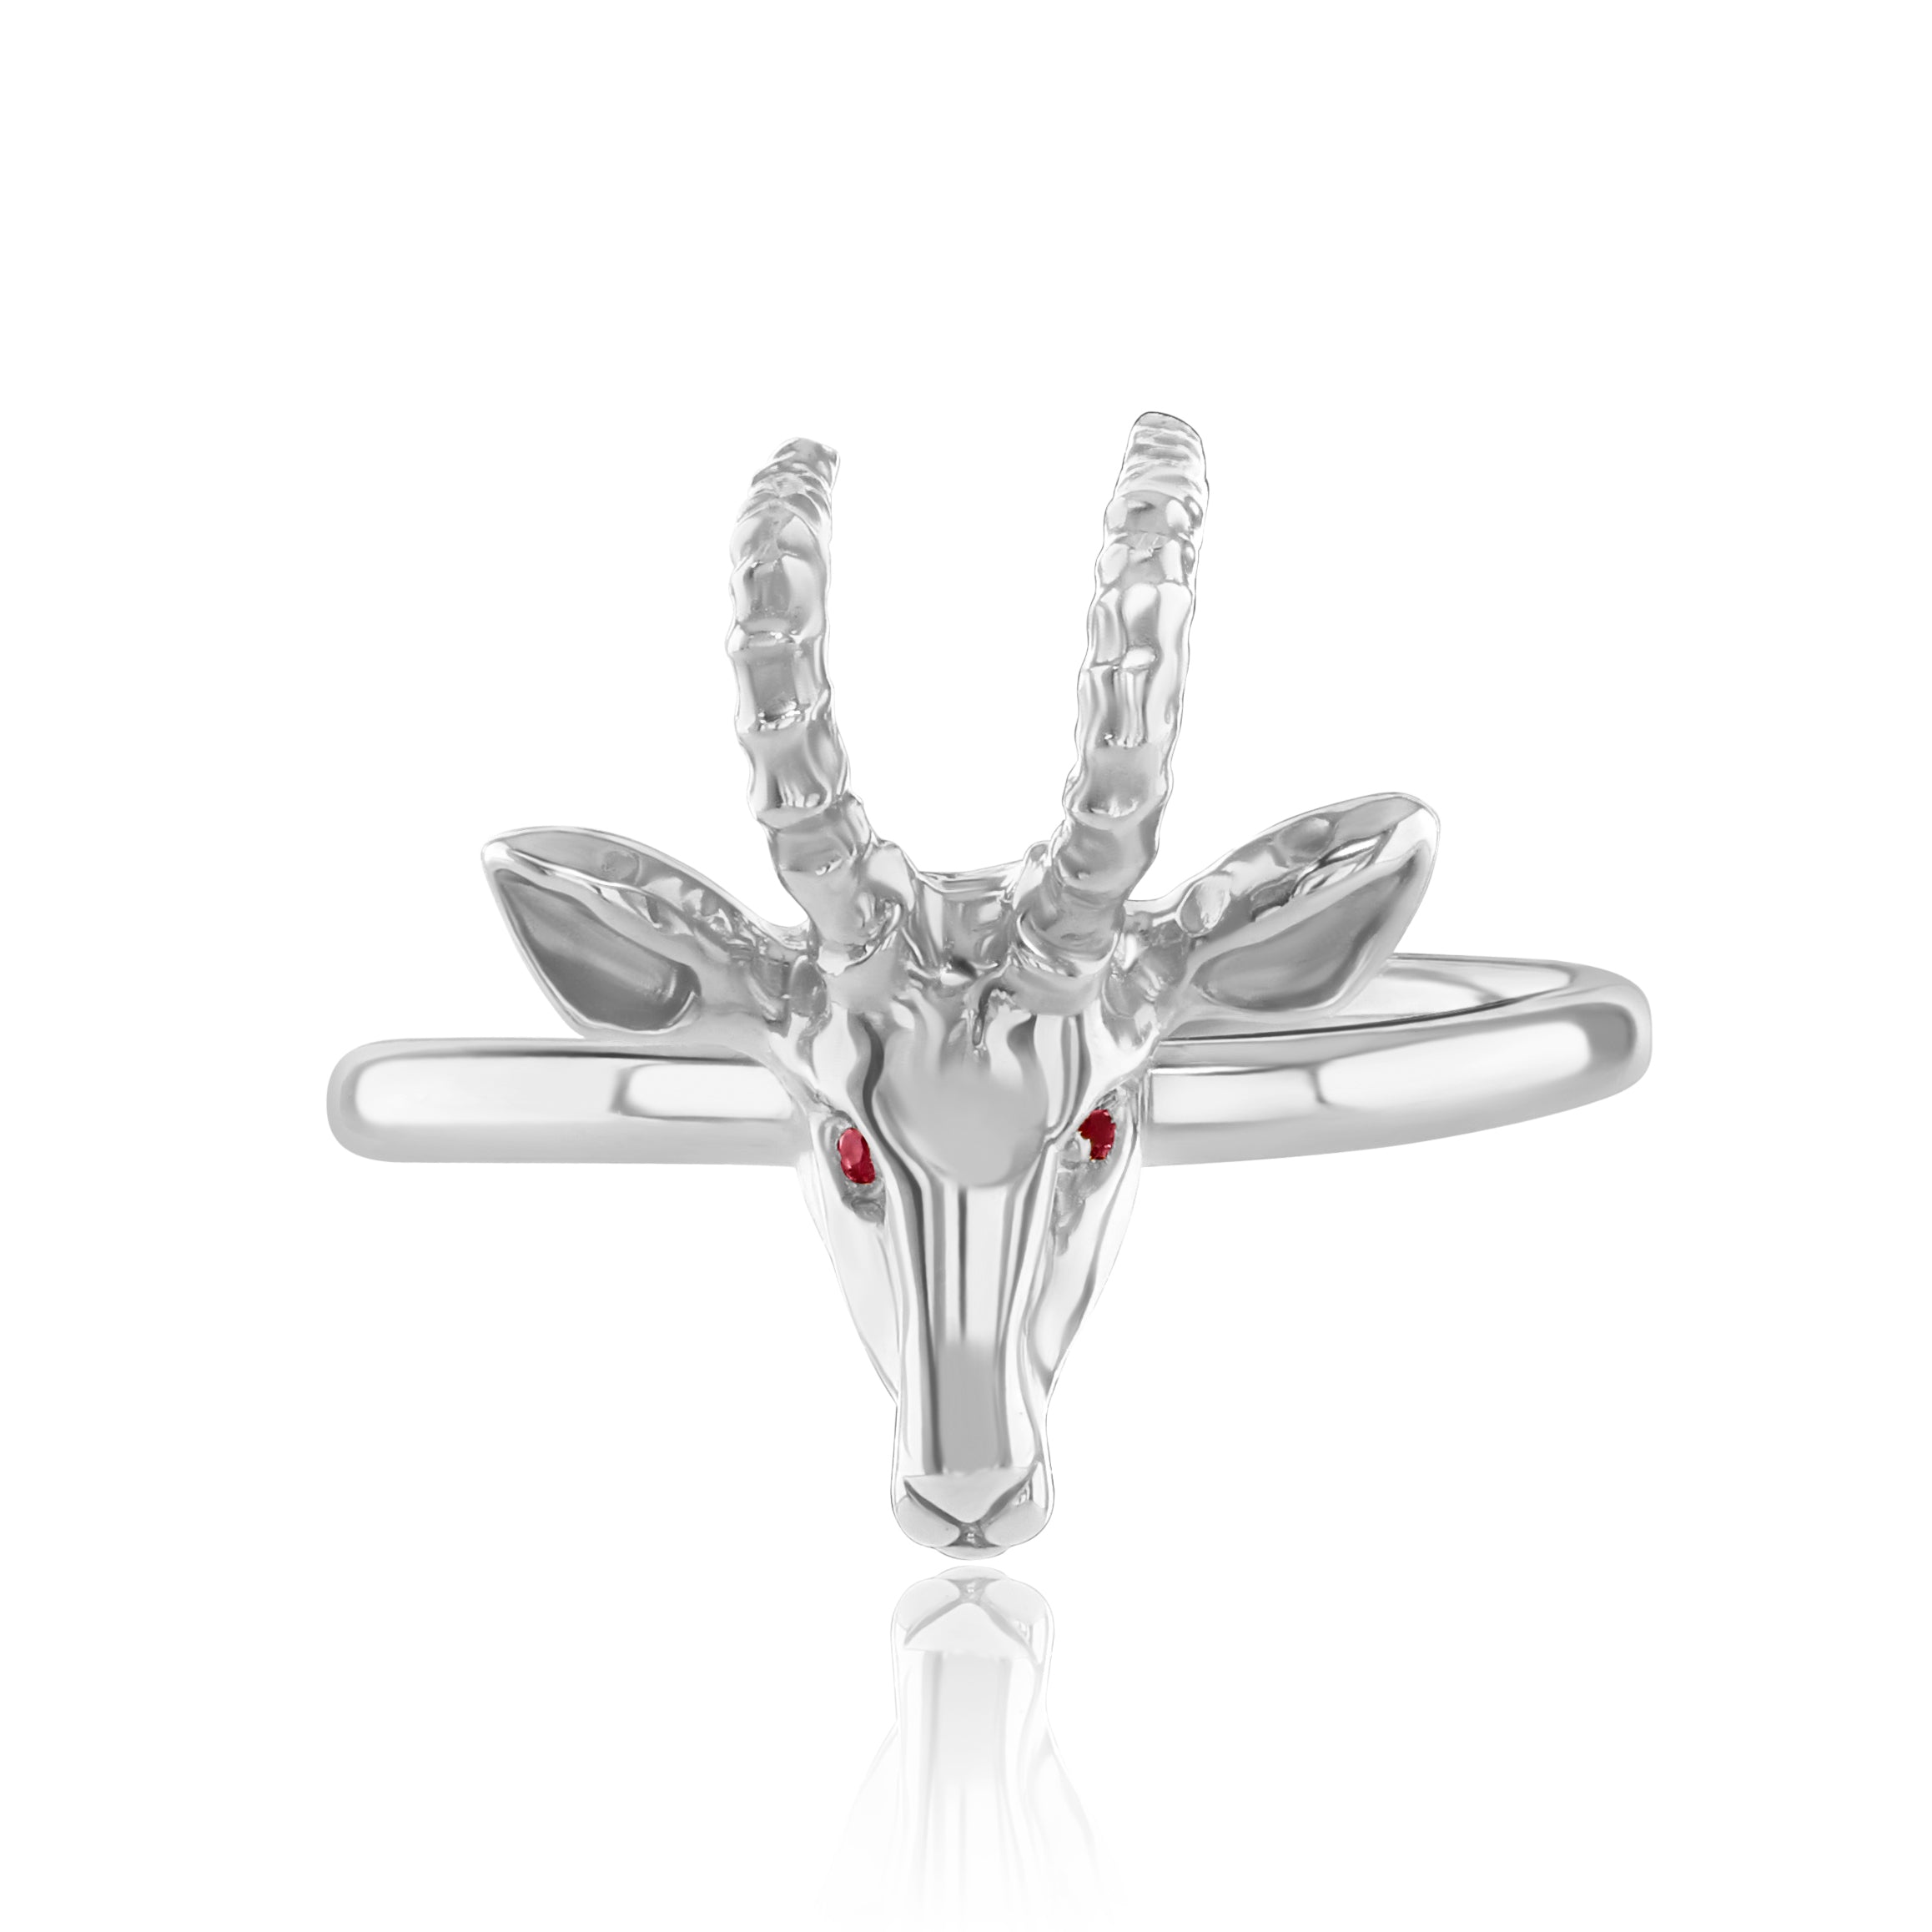 Sterling silver Gazelle ring